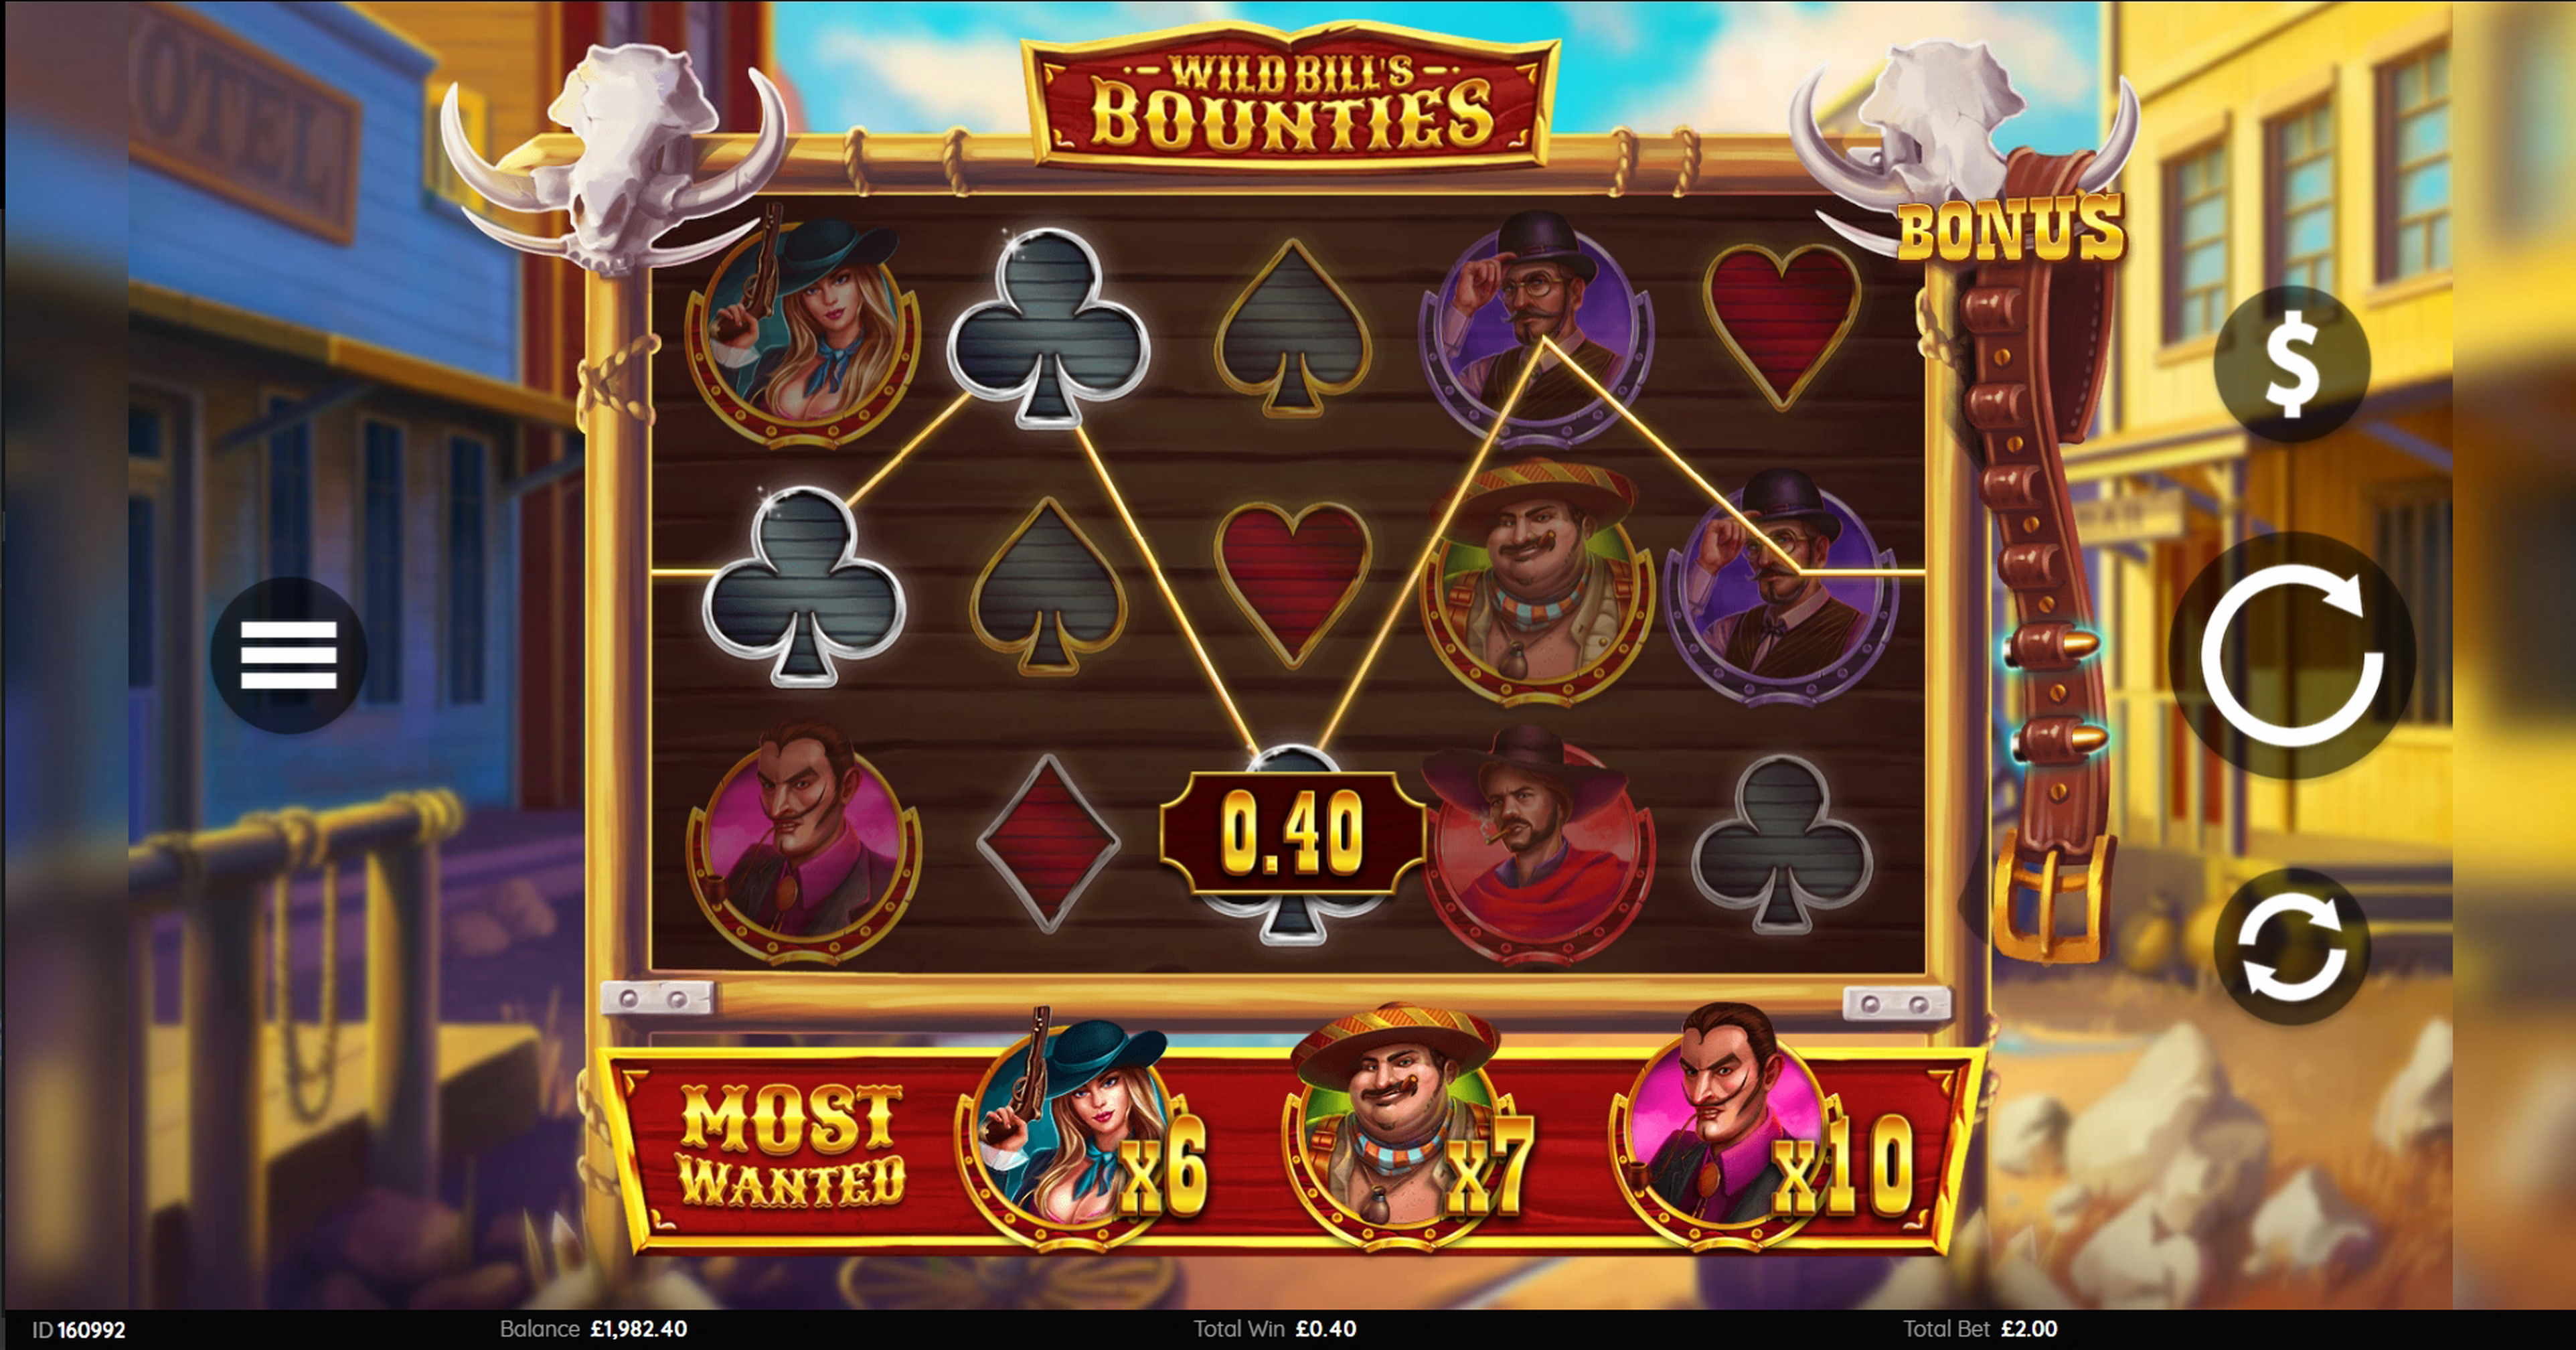 Win Money in Wild Bills Bounties Free Slot Game by Endemol Games